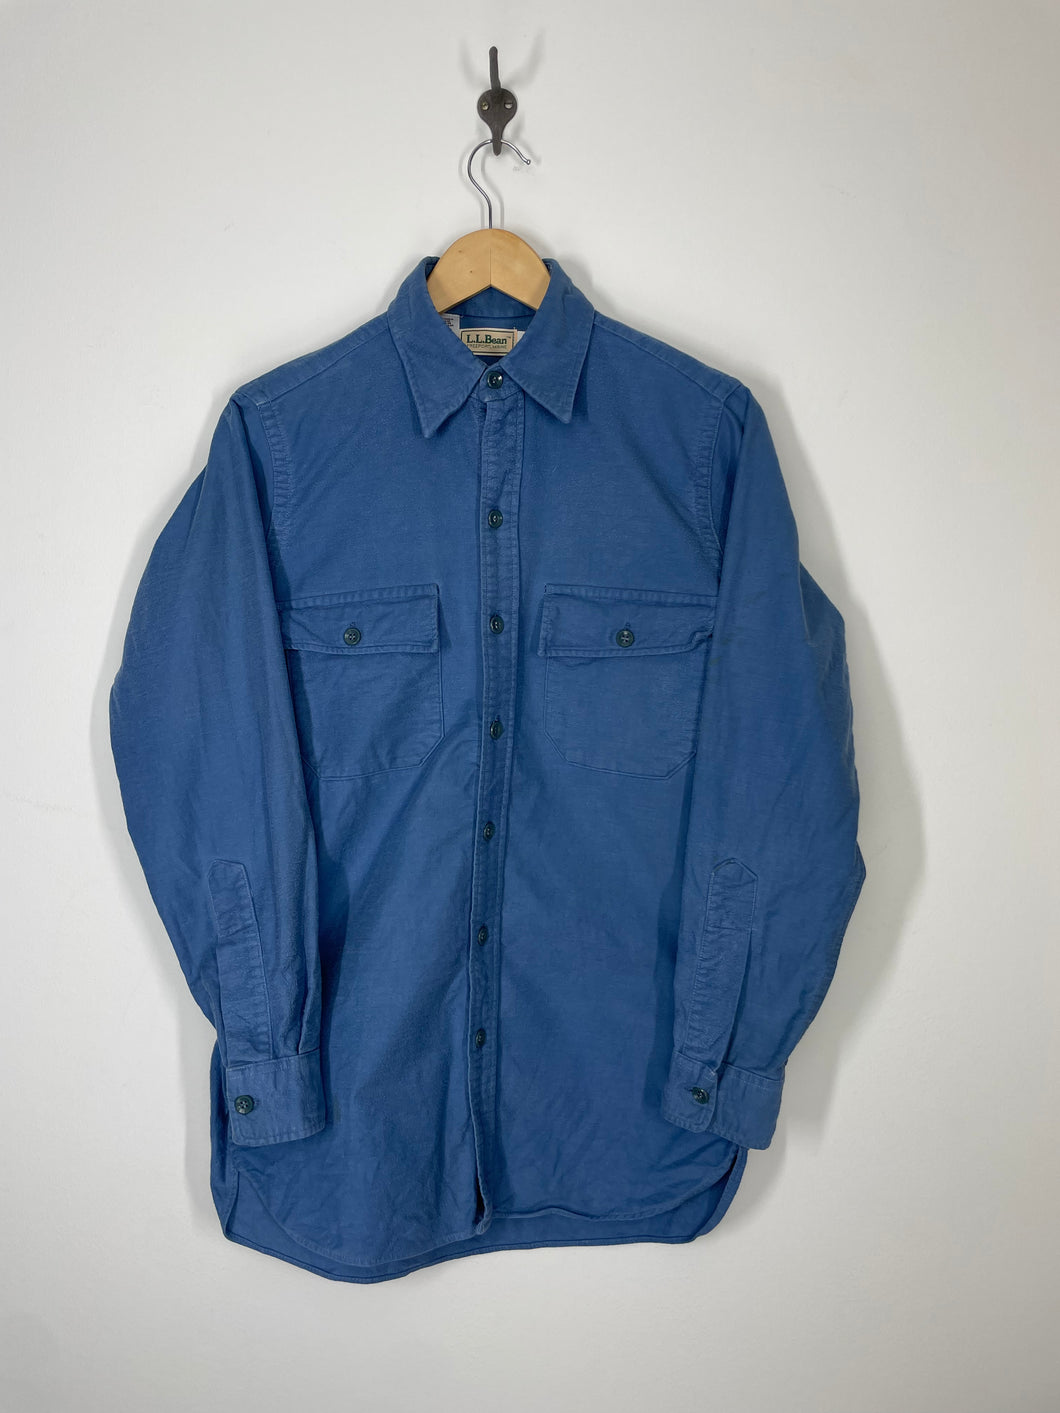 LL Bean Freeport Chamois Cloth Button Up Shirt - 14 1/2